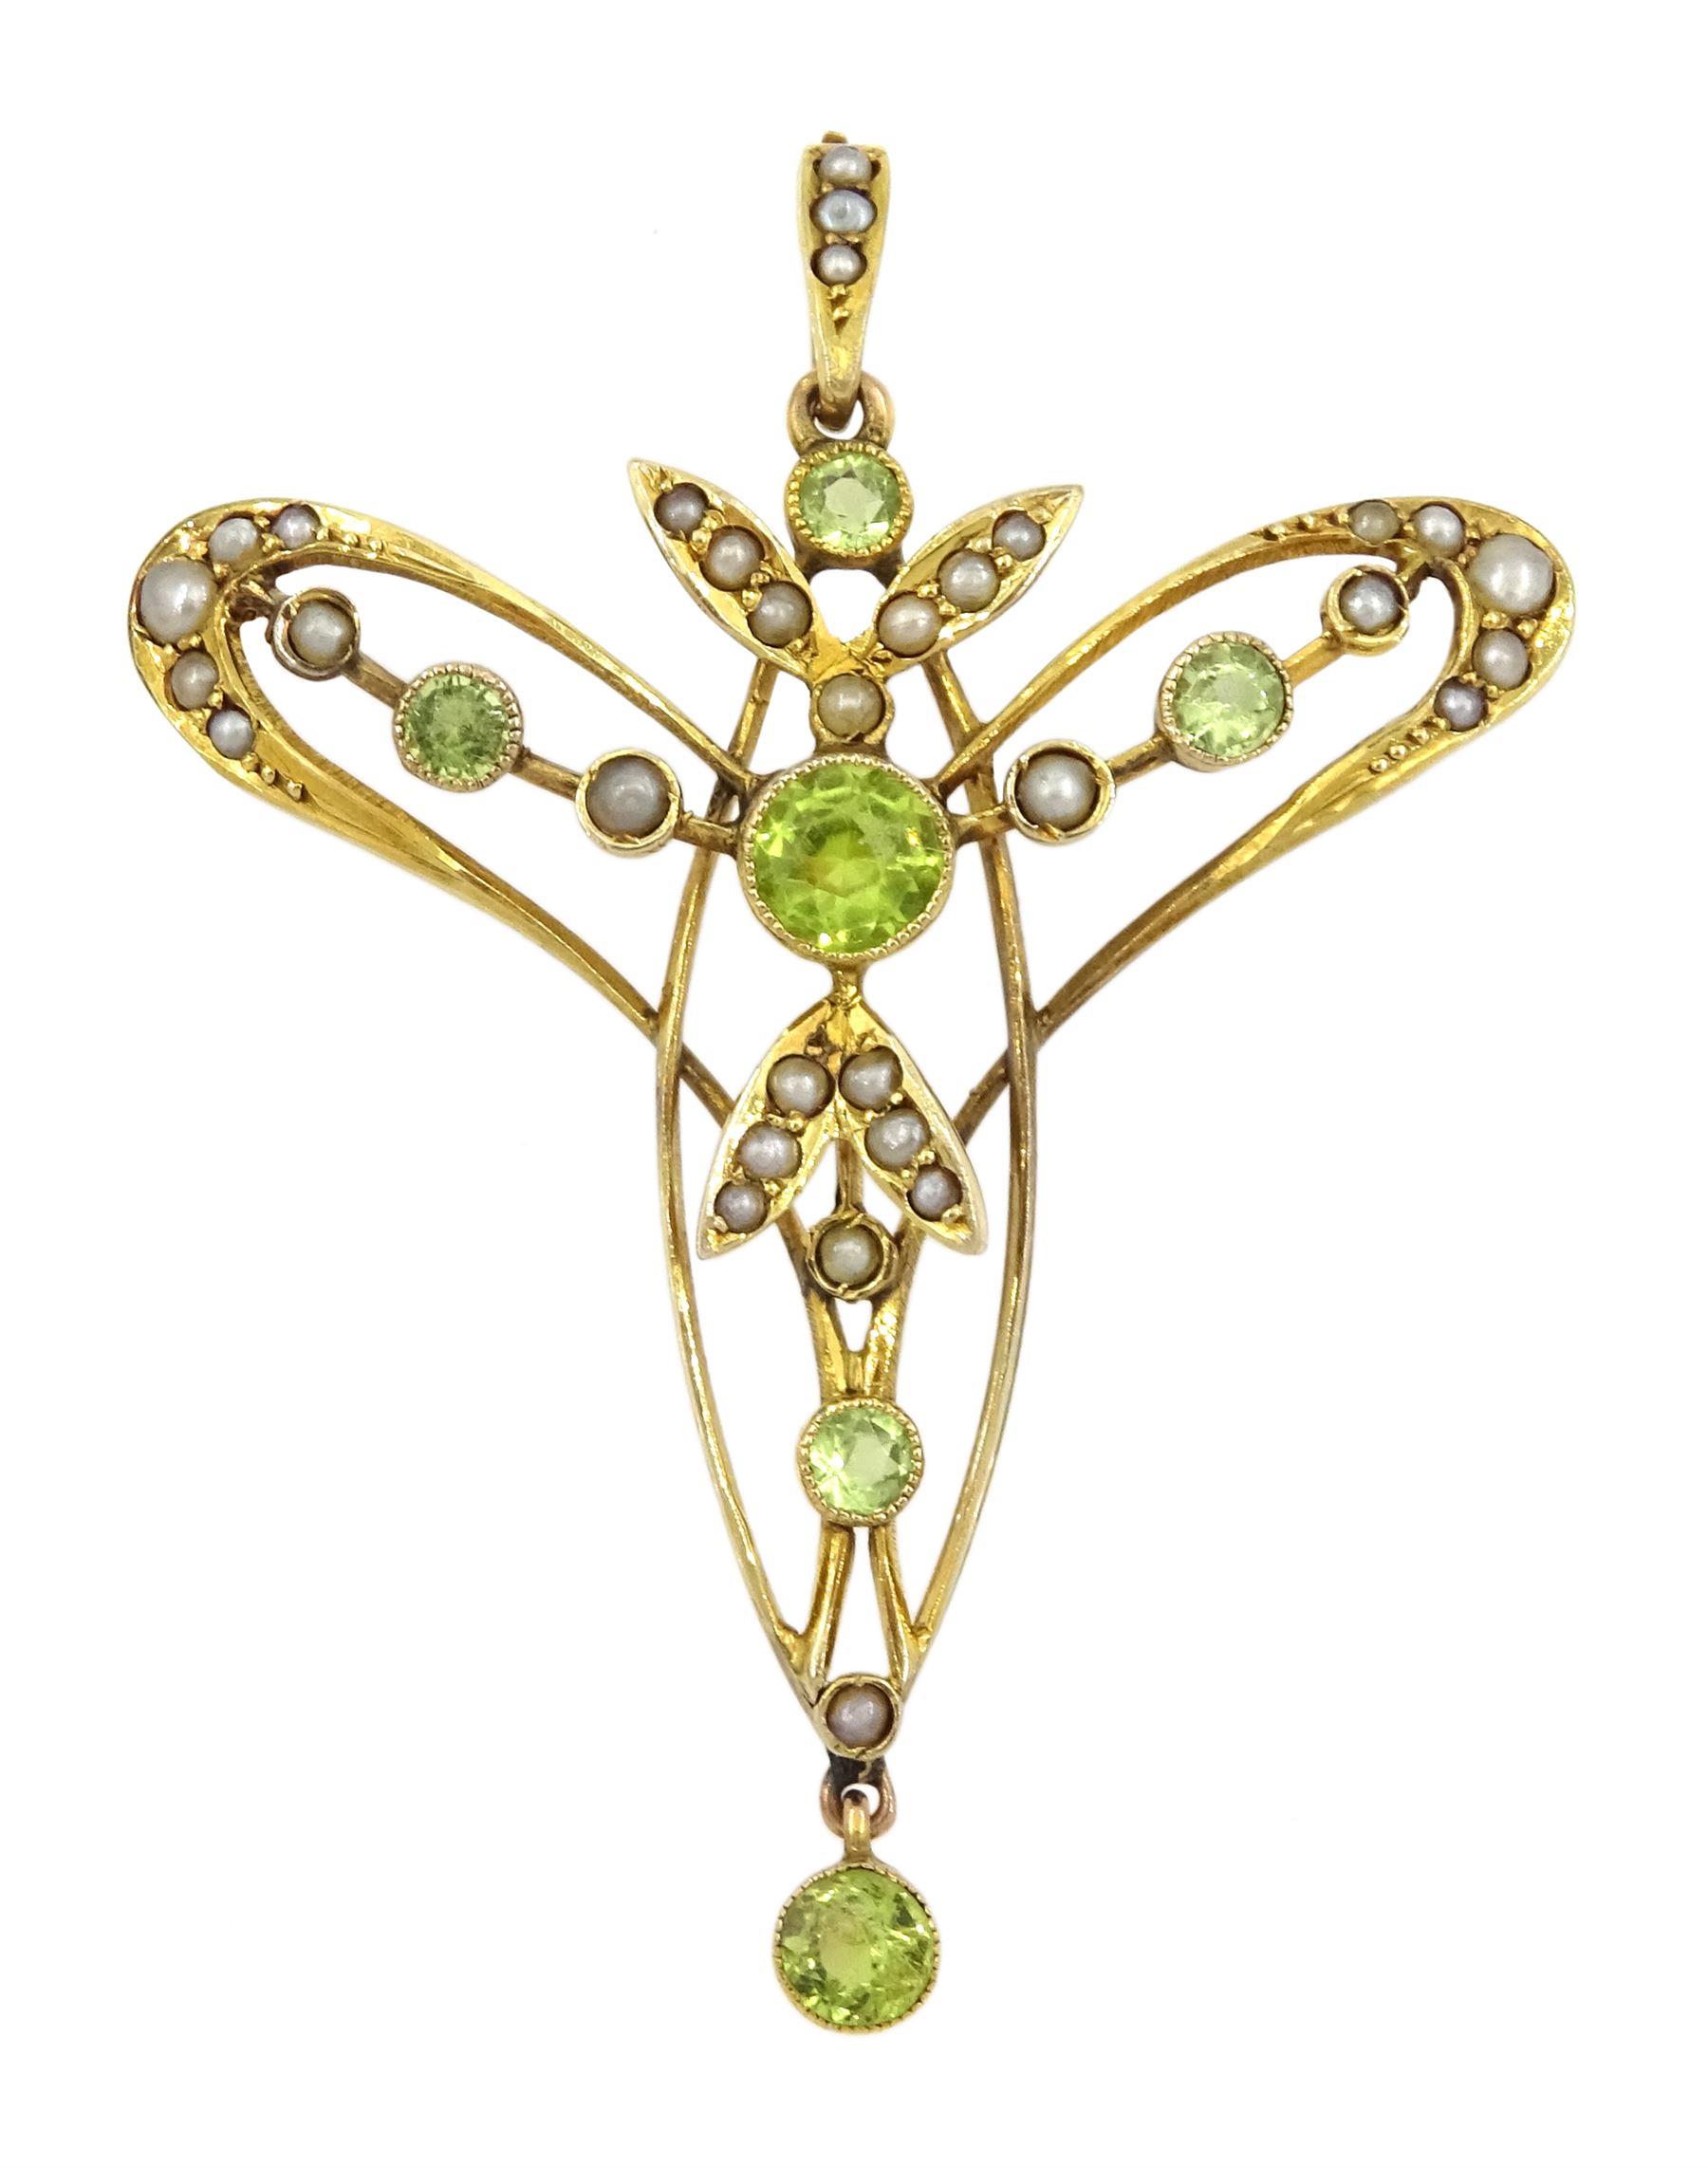 Edwardian Art Nouveau gold peridot and seed pearl pendant/brooch